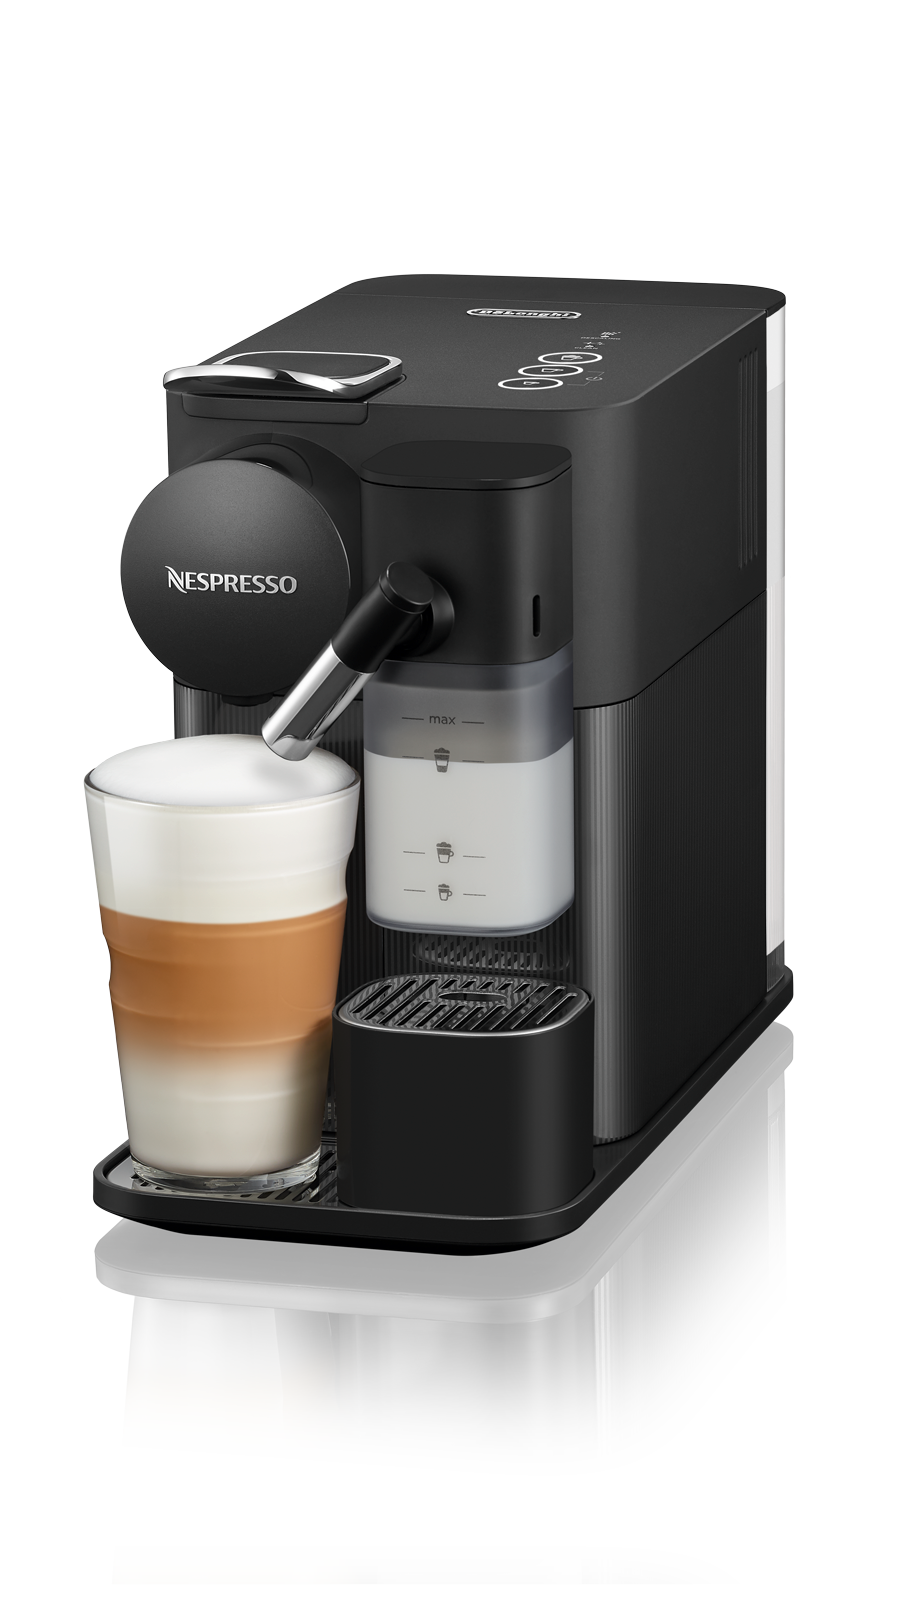 De´Longhi EN510.B Lattissima One Nespresso  Kaffee-Kapselmaschine schwarz 